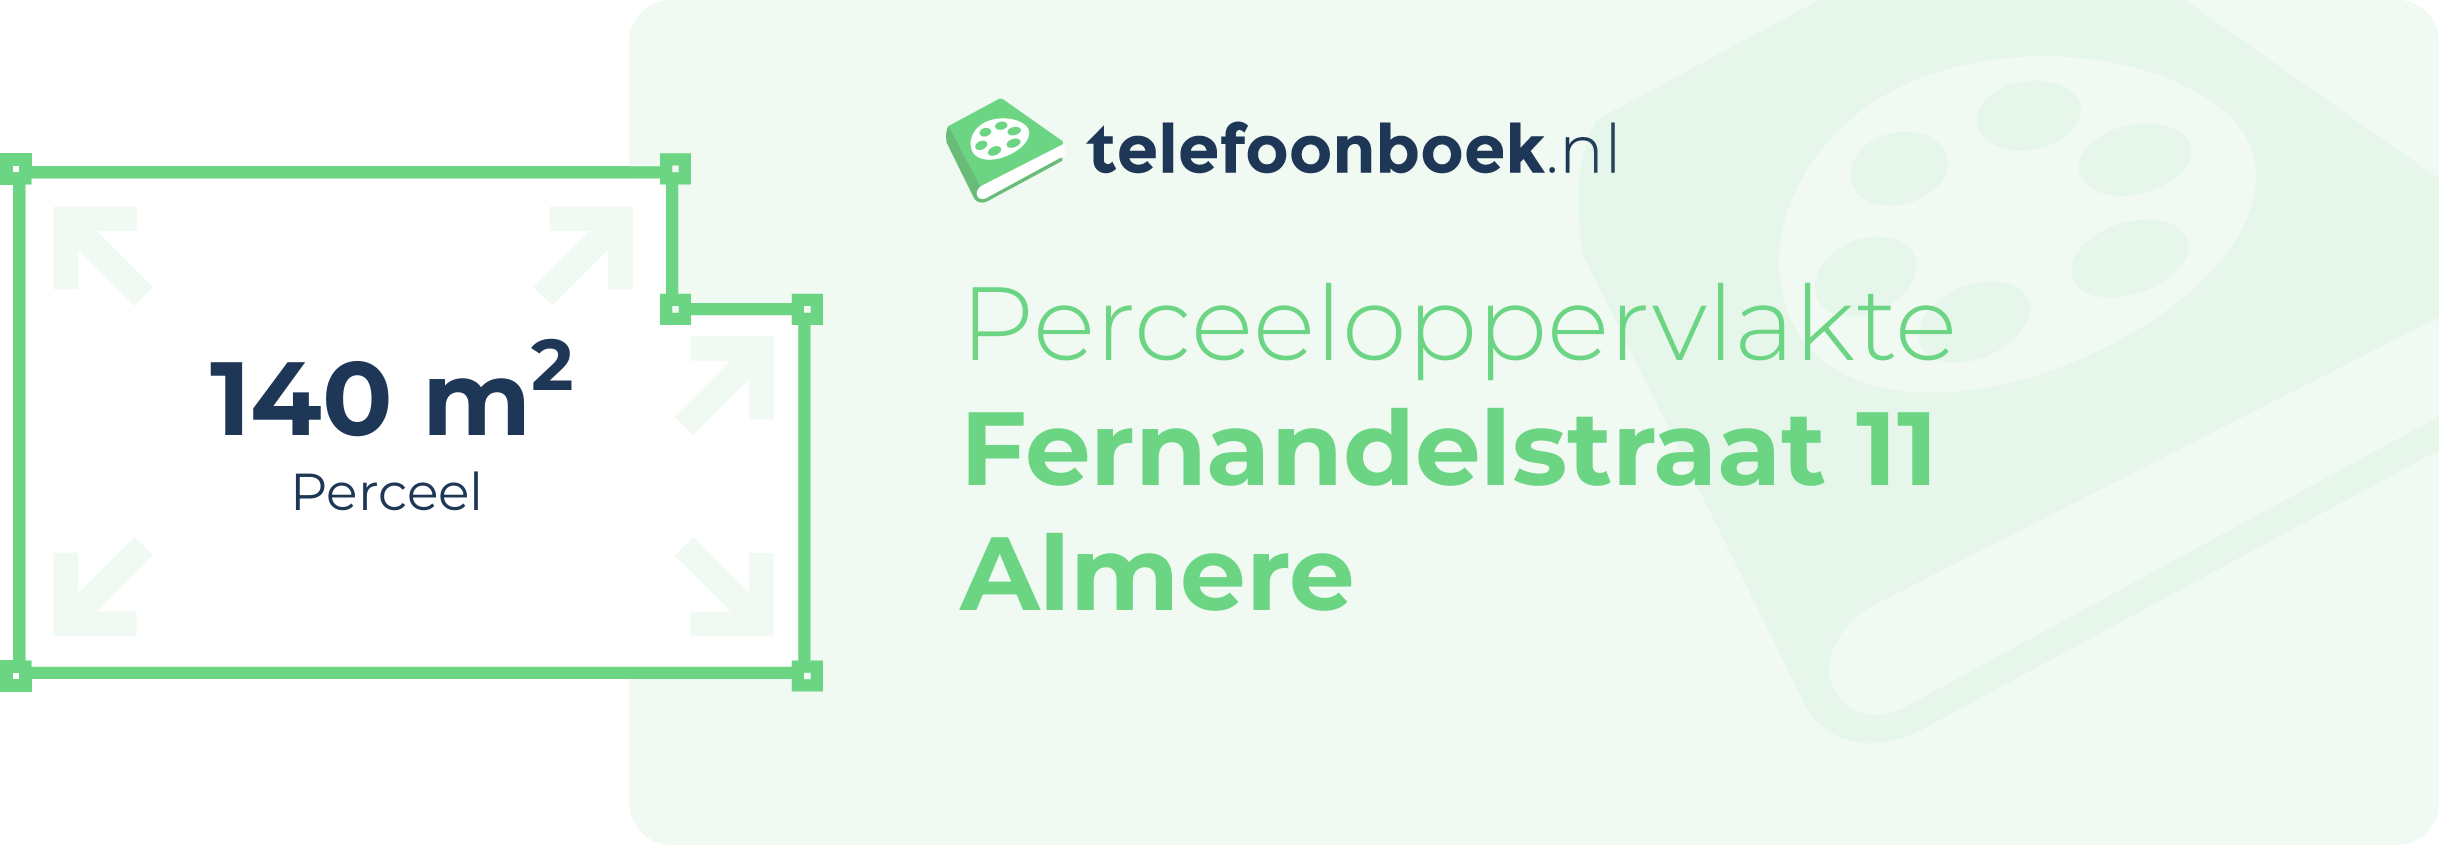 Perceeloppervlakte Fernandelstraat 11 Almere